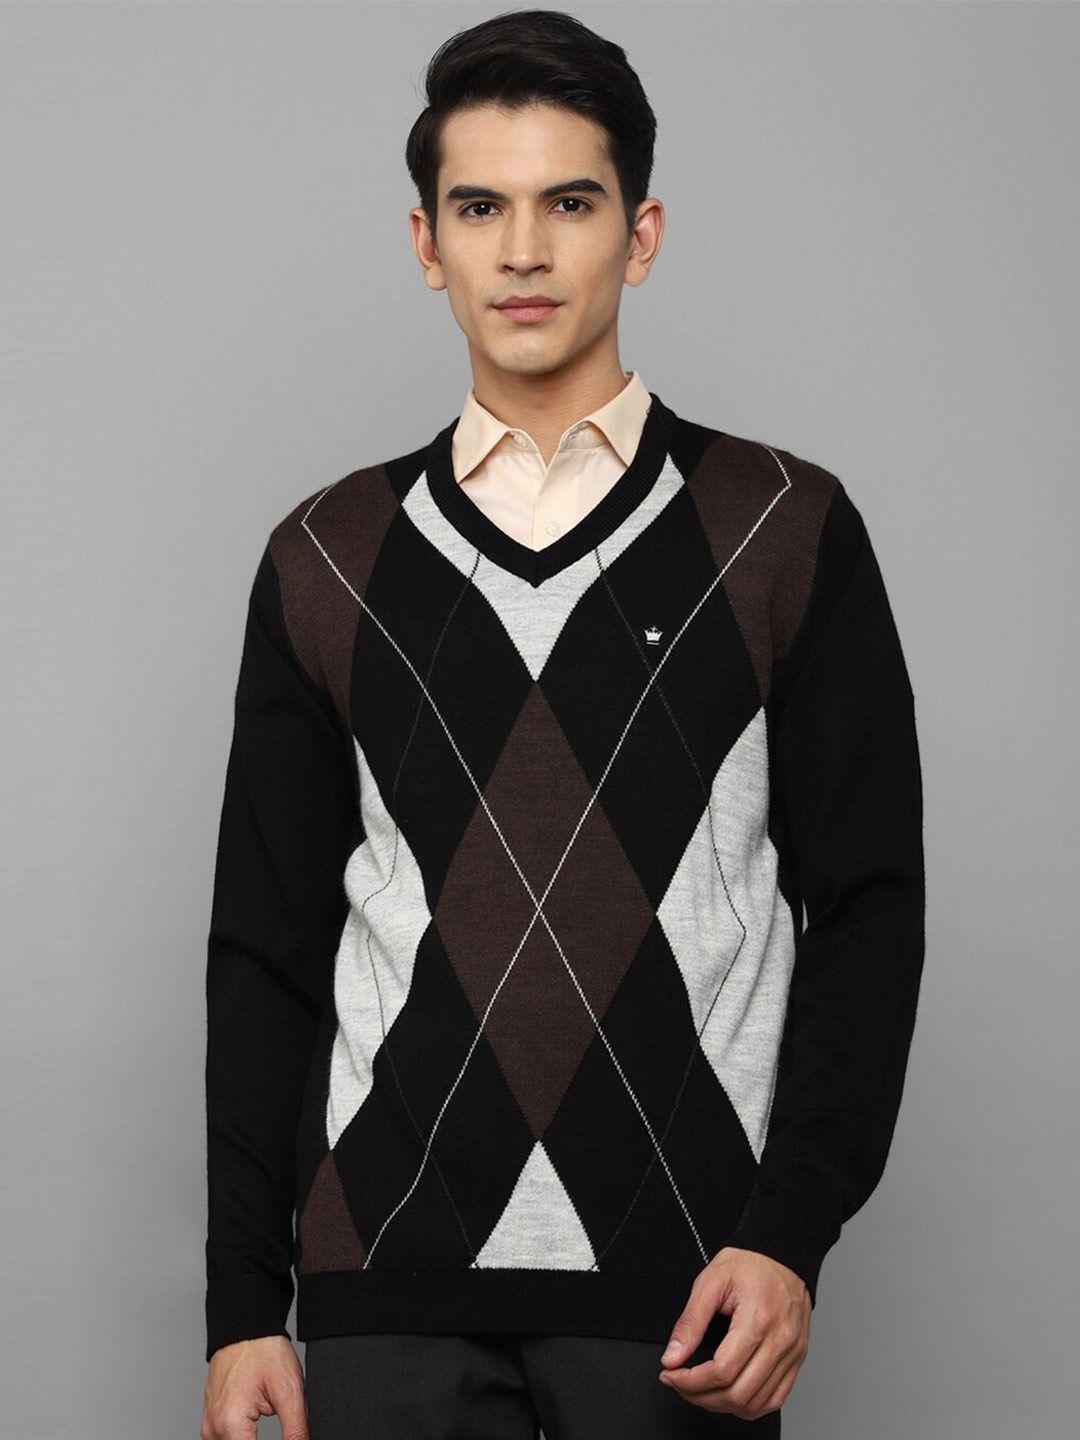 louis philippe men black & white printed sweater vest